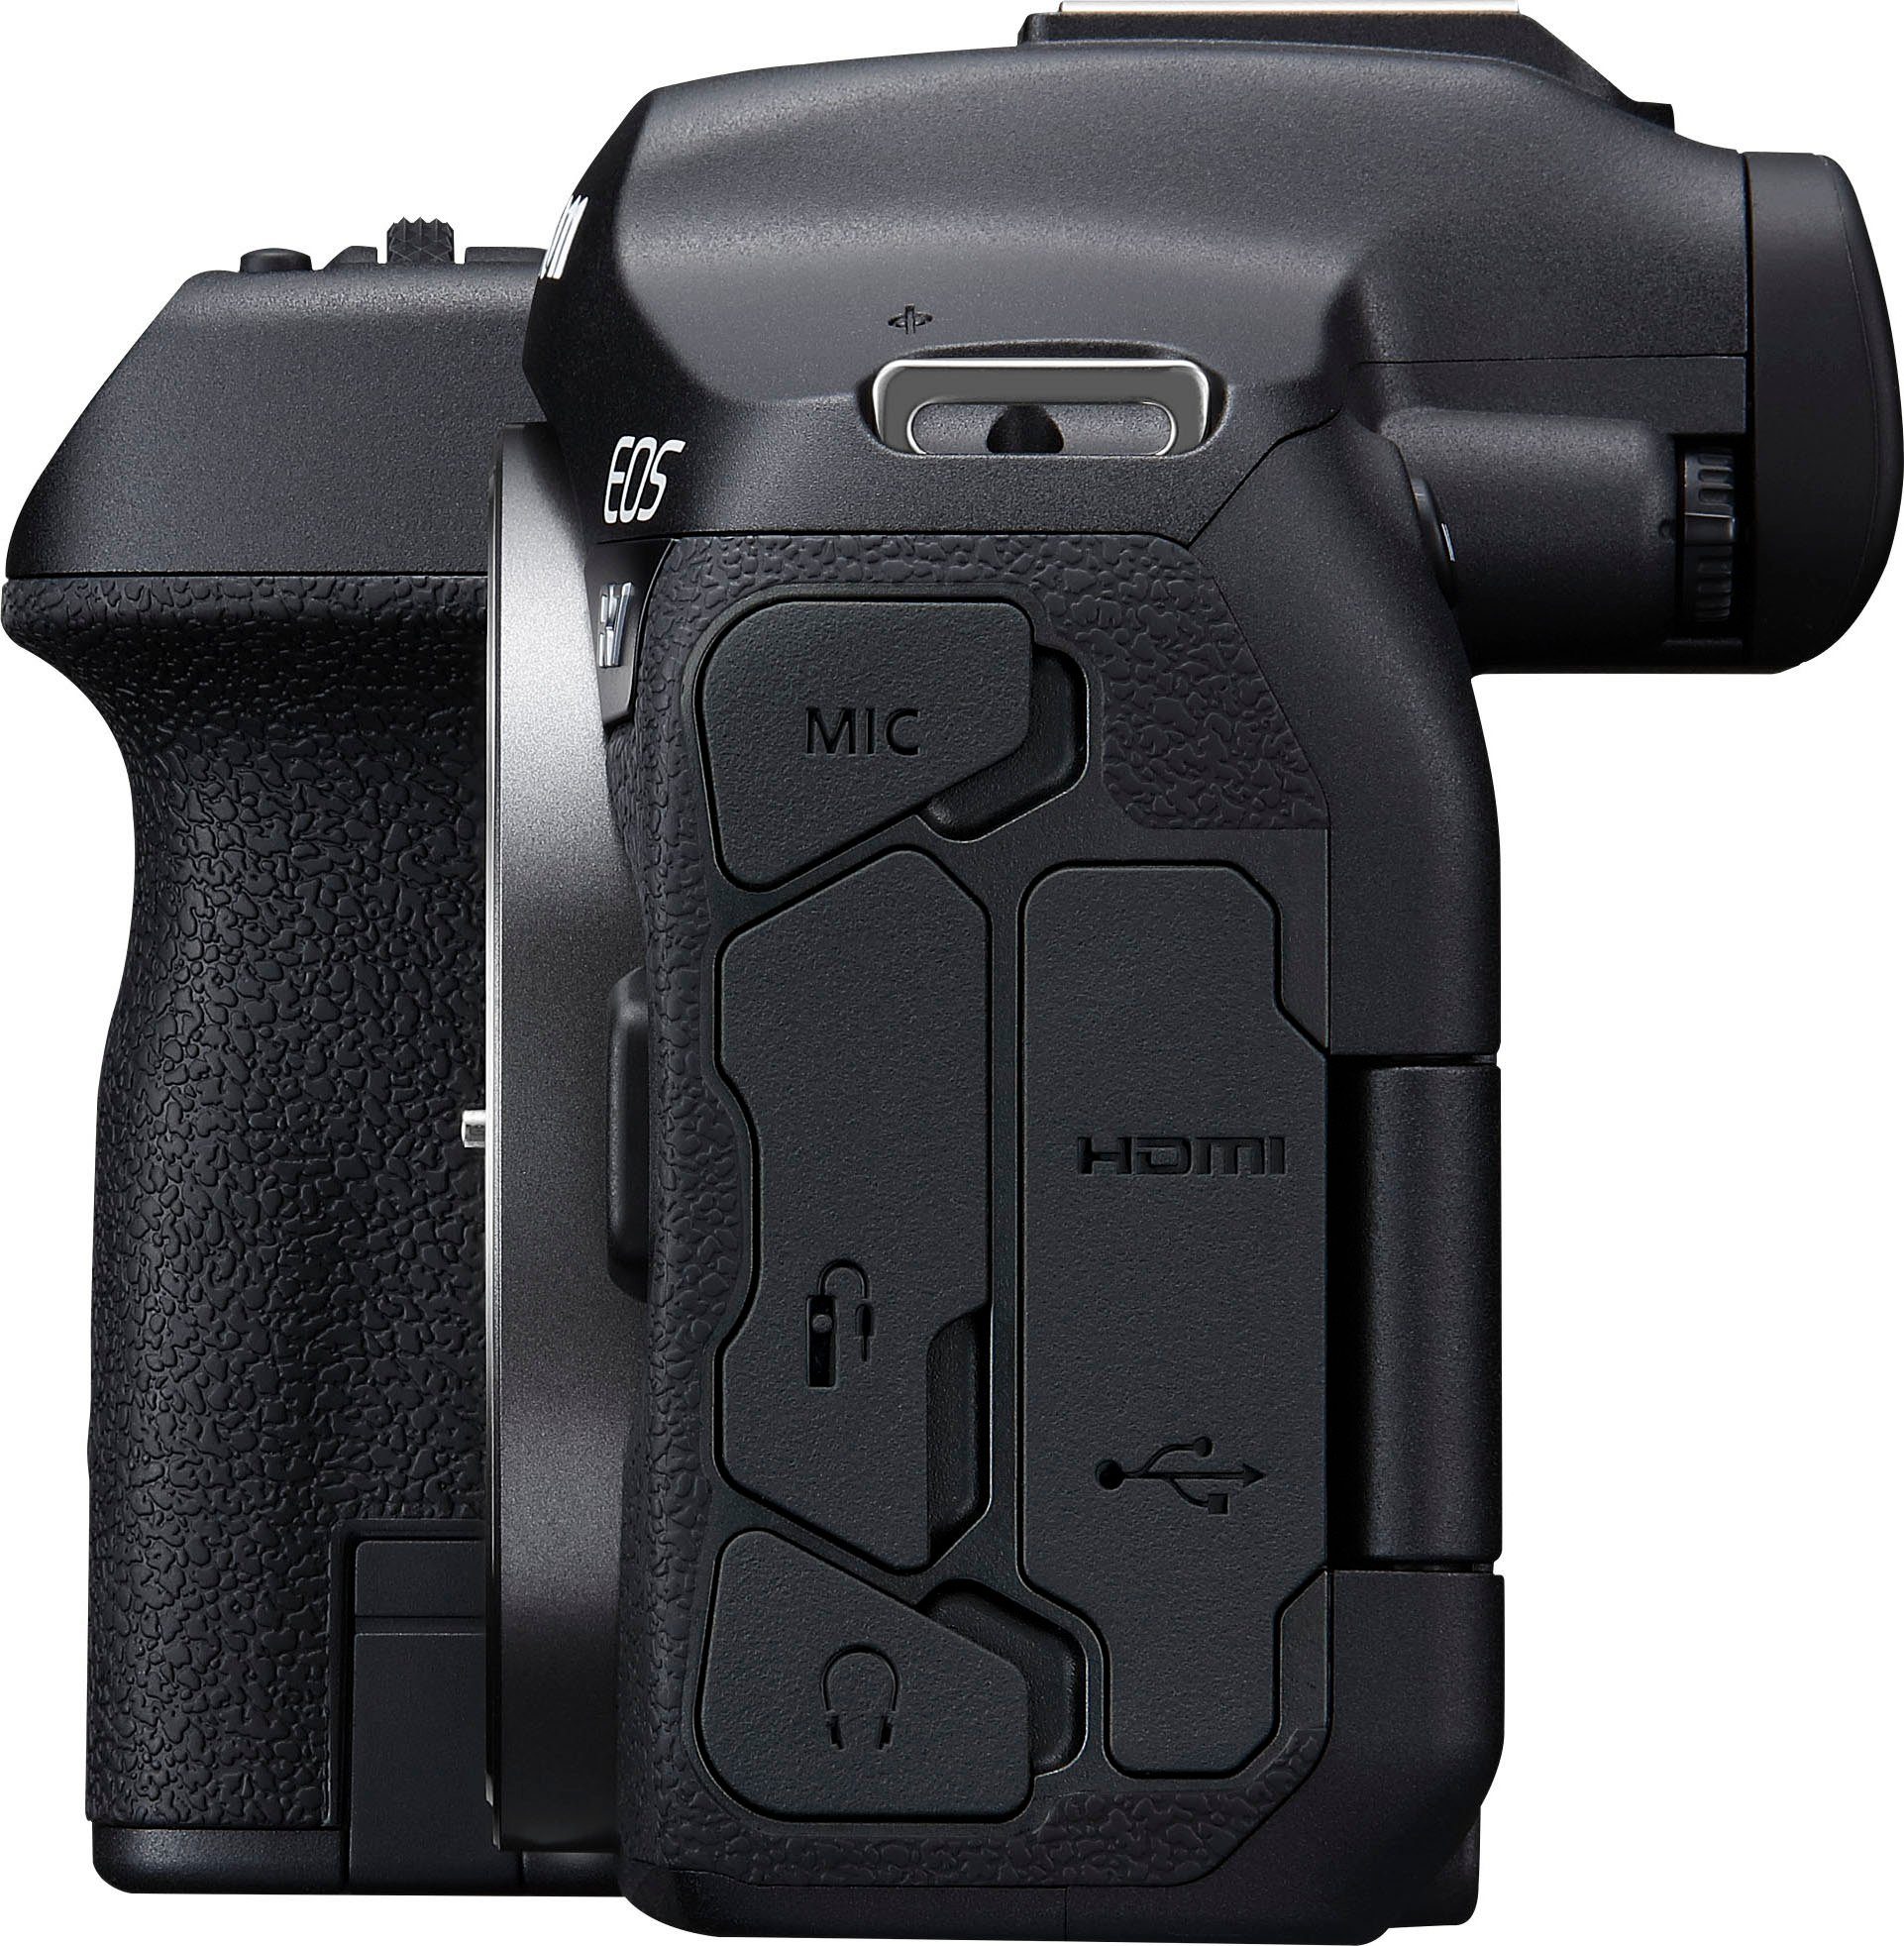 R7 WLAN) (32,5 MP, Systemkamera EOS Bluetooth, Body Canon